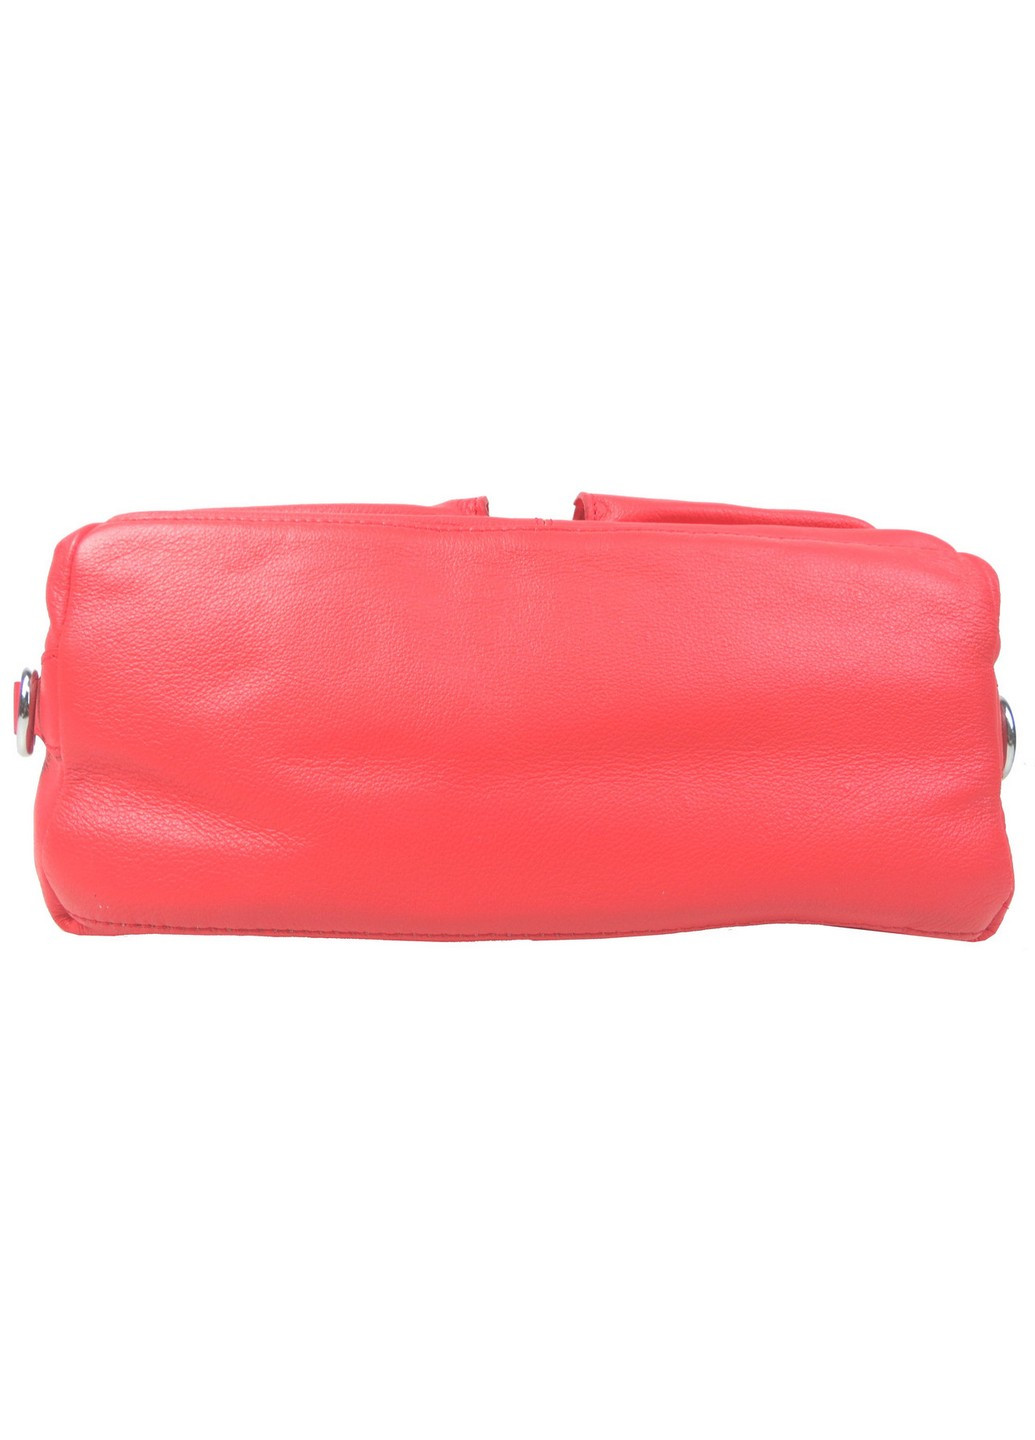 Шкіряна сумка - рюкзак траснформер жіноча 34х31х12, 5 см Giorgio Ferretti (257255124)